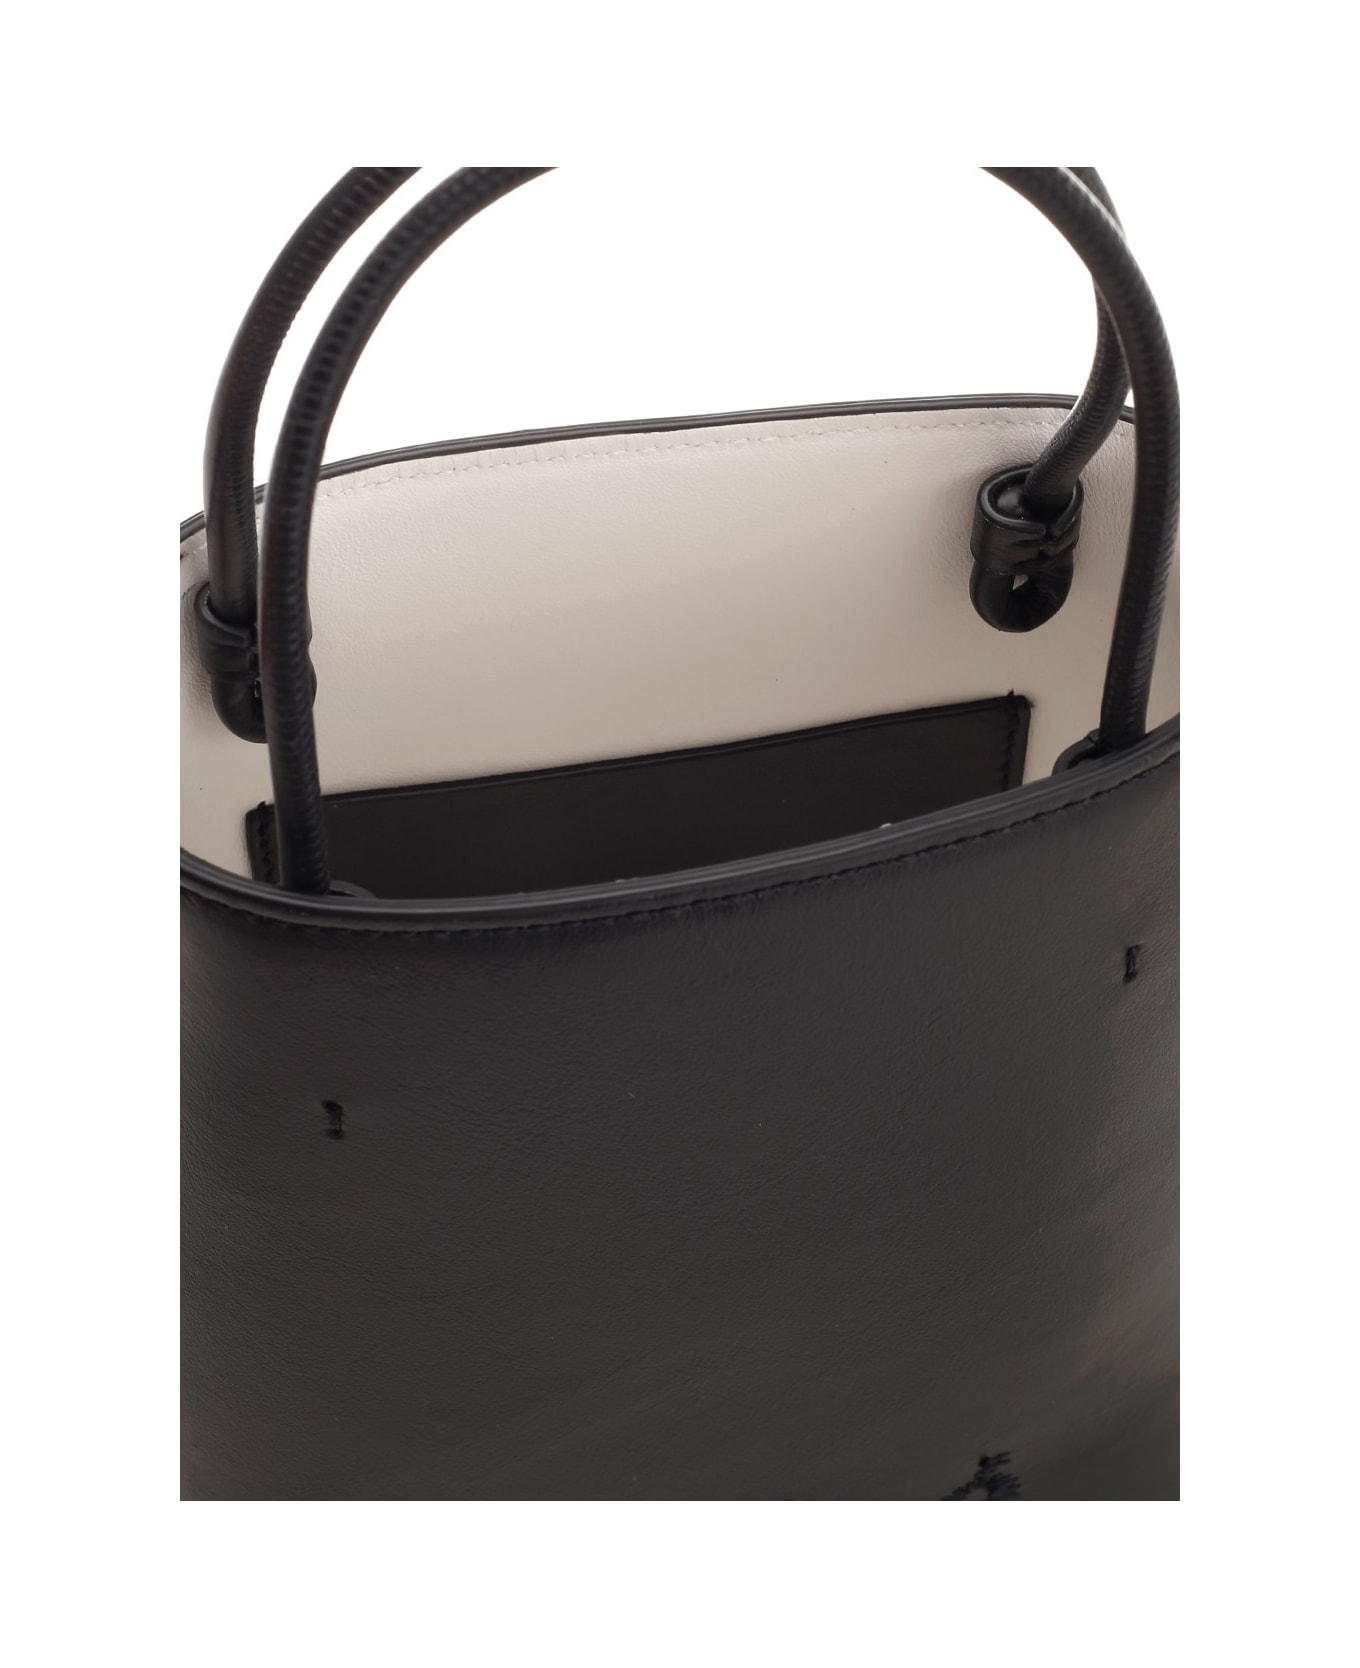 Chloé 'sense' Micro Bucket Bag - Black